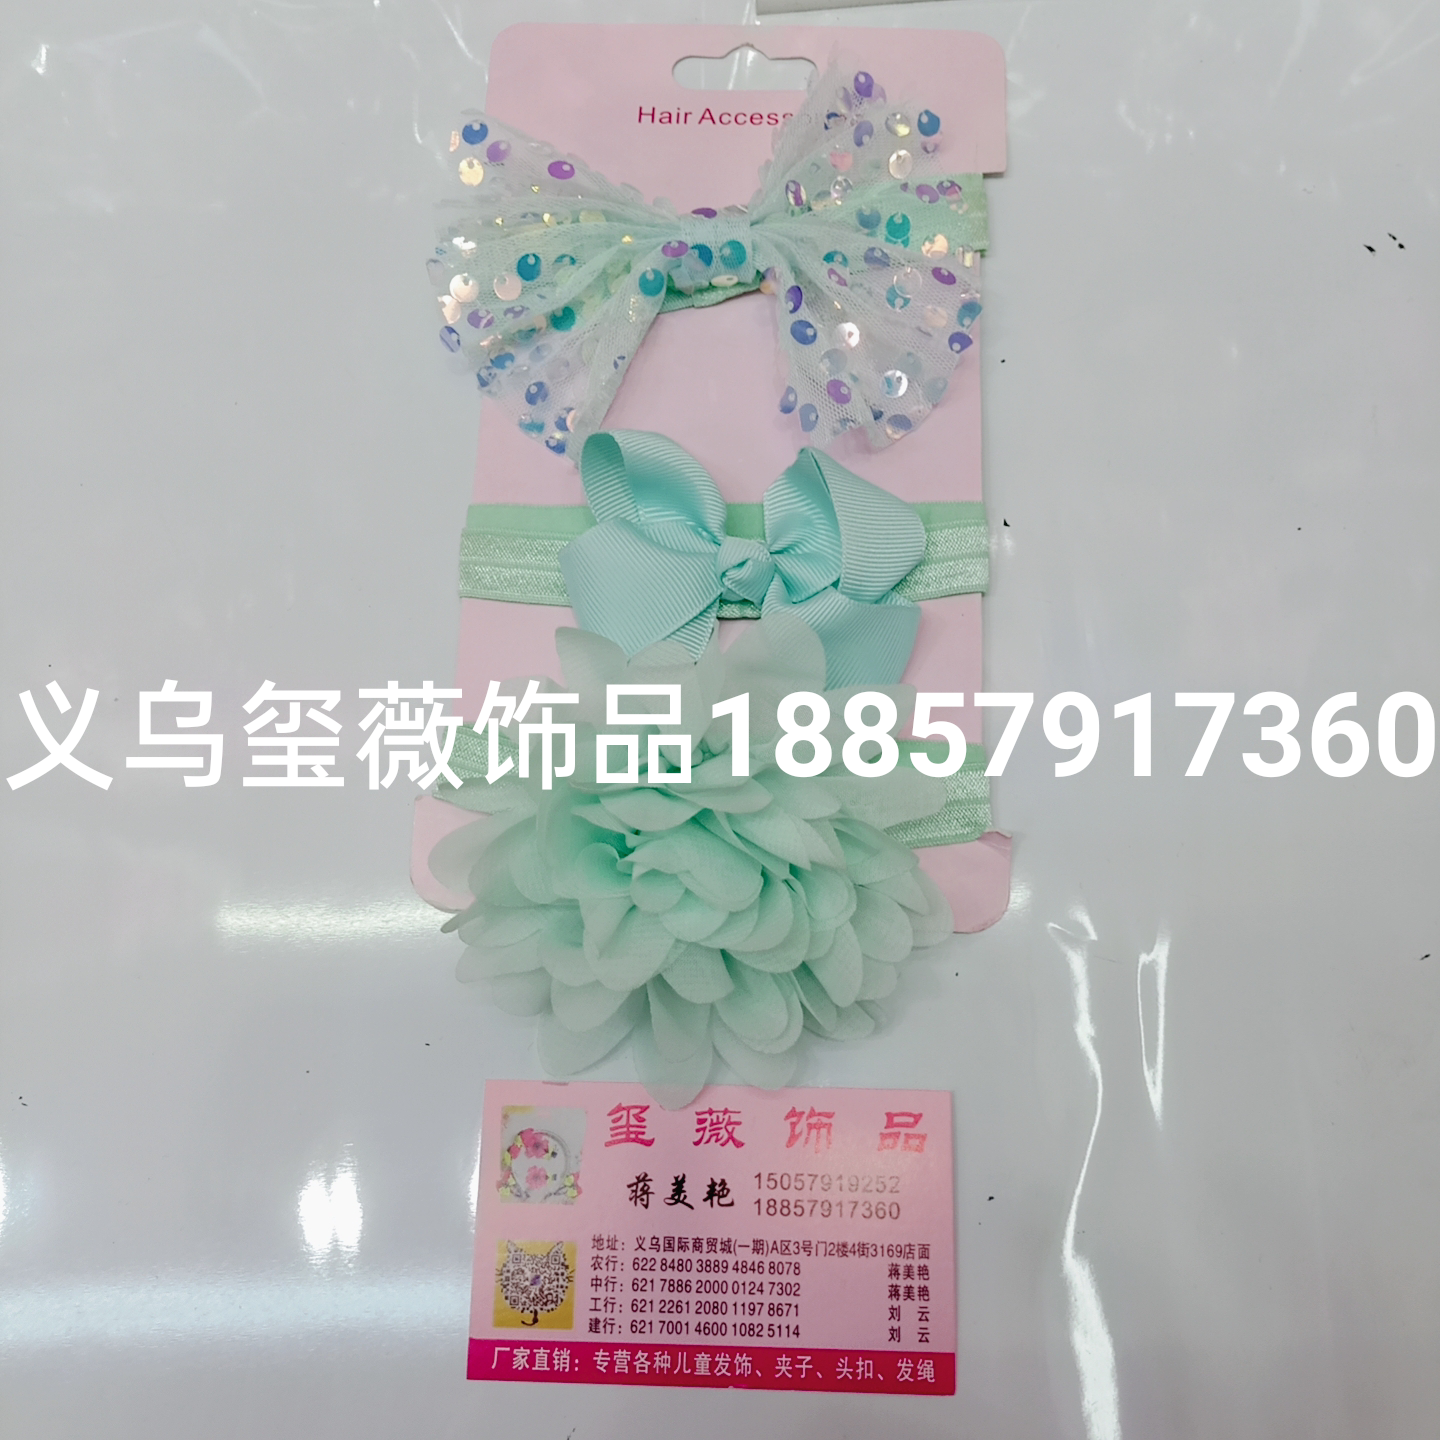 Childrens headdress set baby photo hair belt girl bow princess hair buckle hairpin manufacturers direct sales